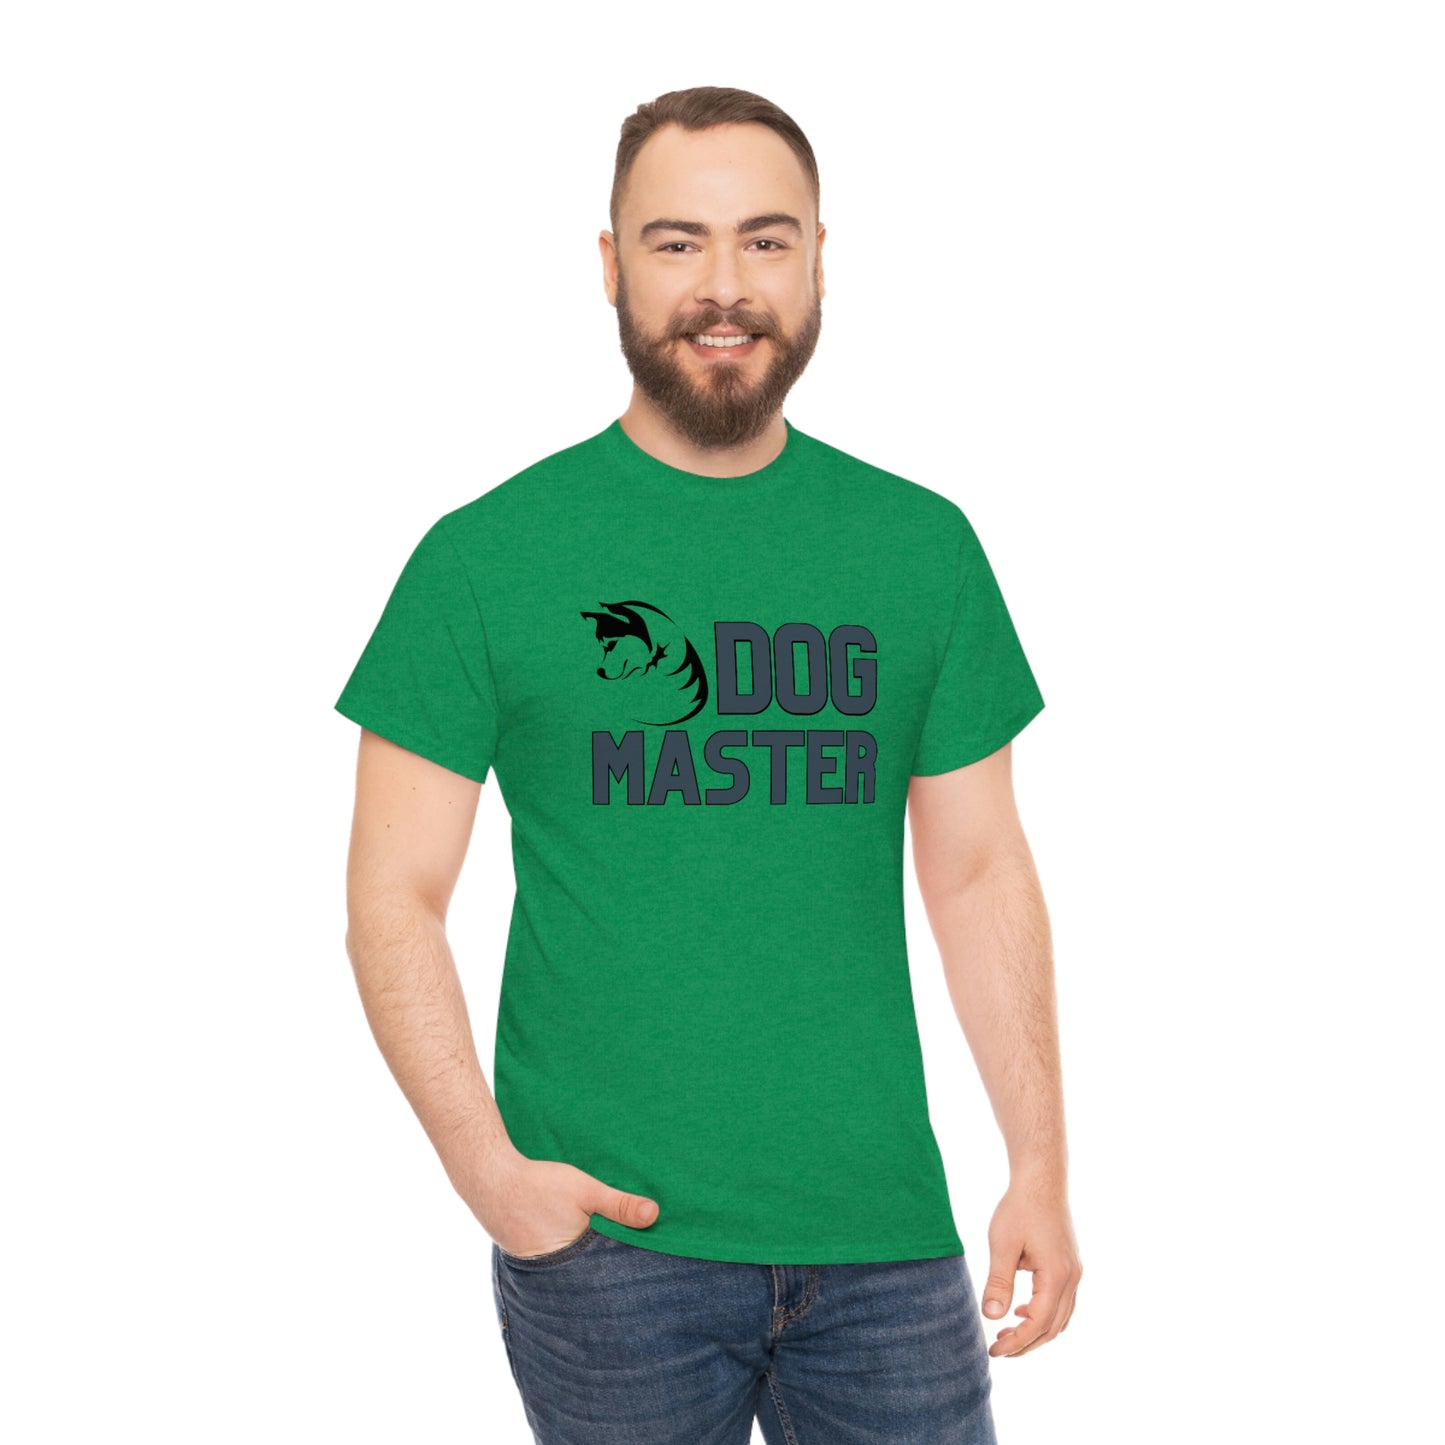 Dog Master with Dog logo design Graphic tee shirt